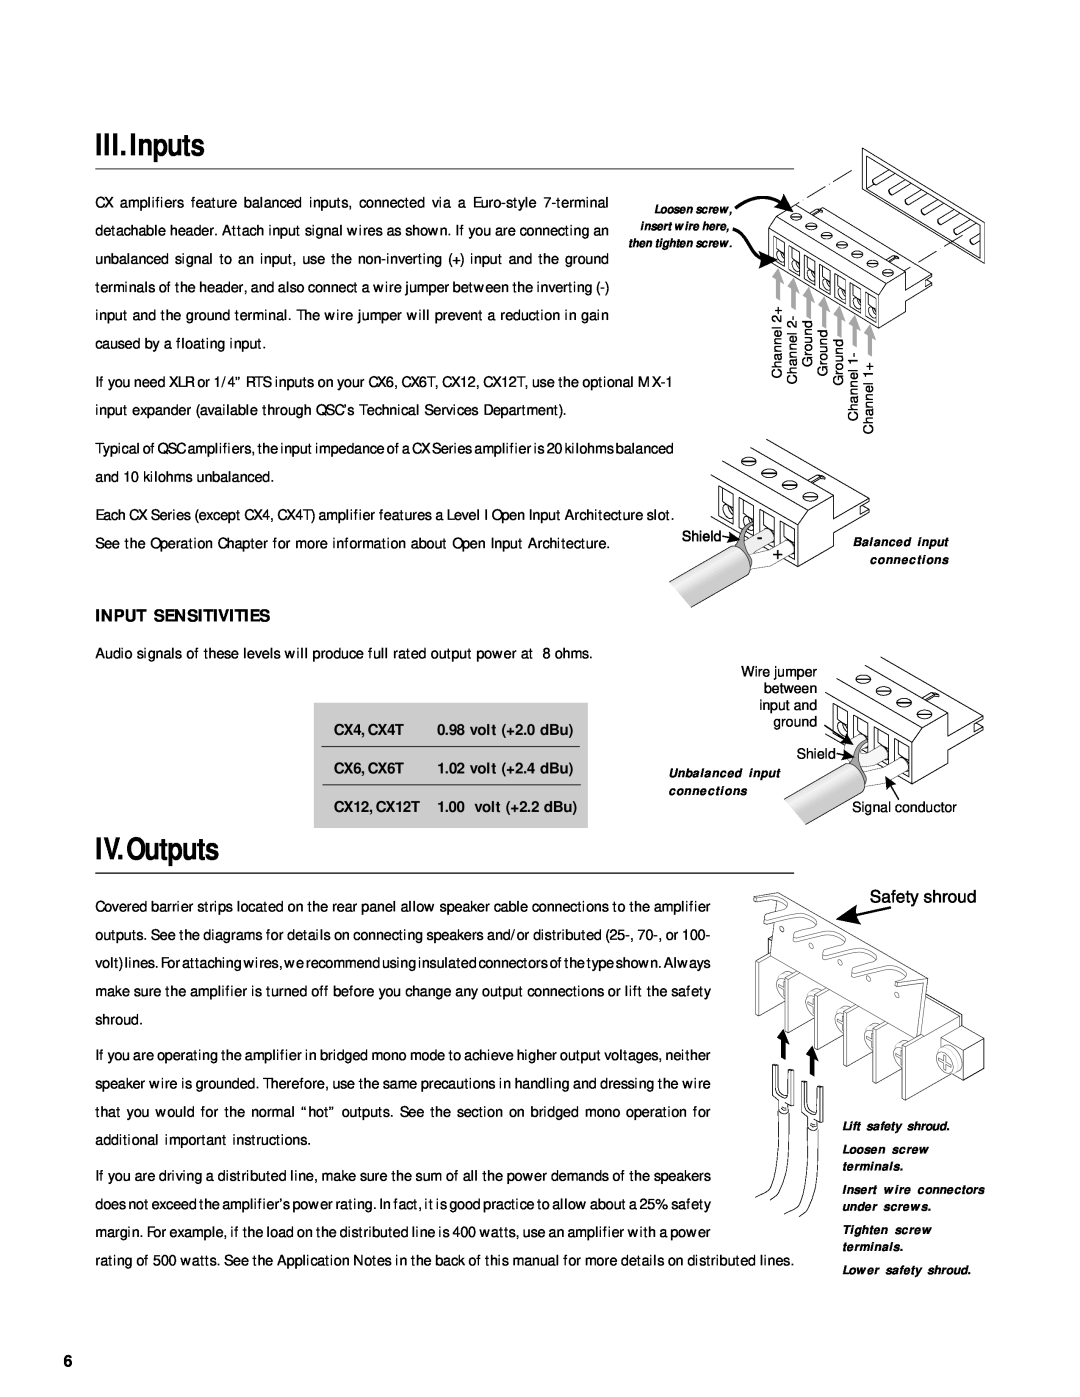 QSC Audio CX Series user manual III. Inputs, IV. Outputs, Input Sensitivities 